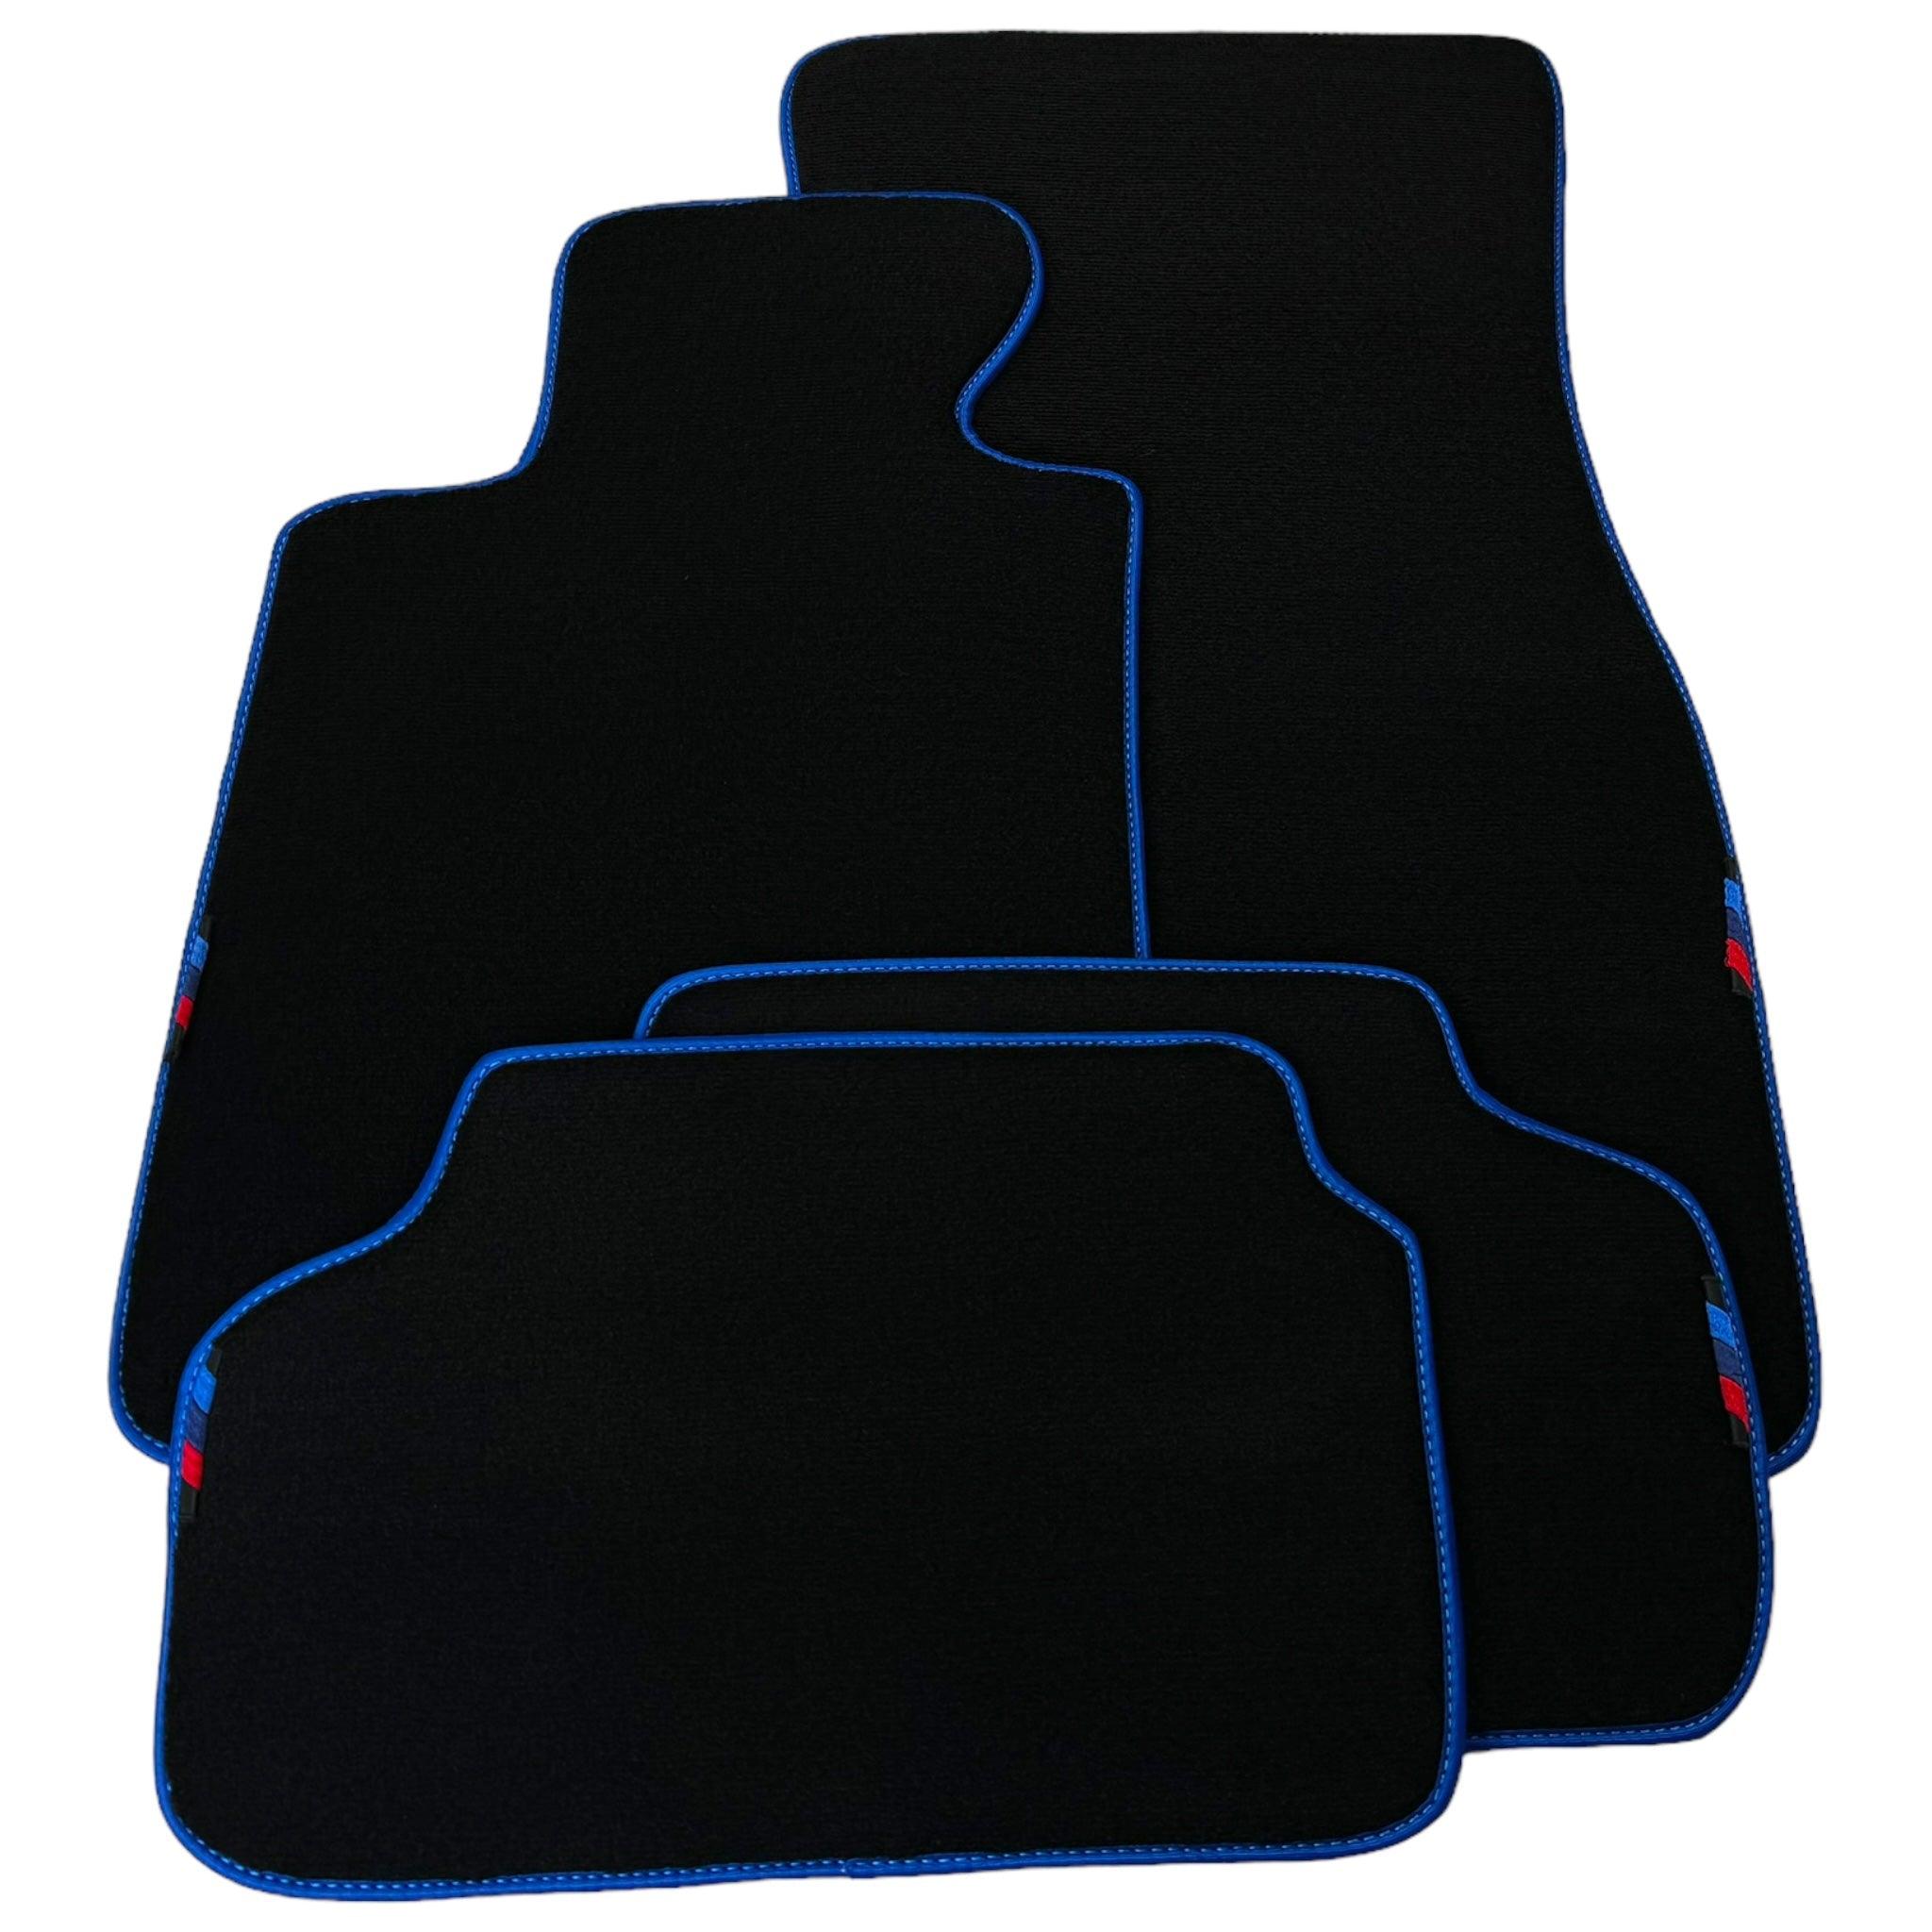 Black Floor Floor Mats For BMW 6 Series G32 GT Gran Turismo | Fighter Jet Edition AutoWin Brand |Blue Trim